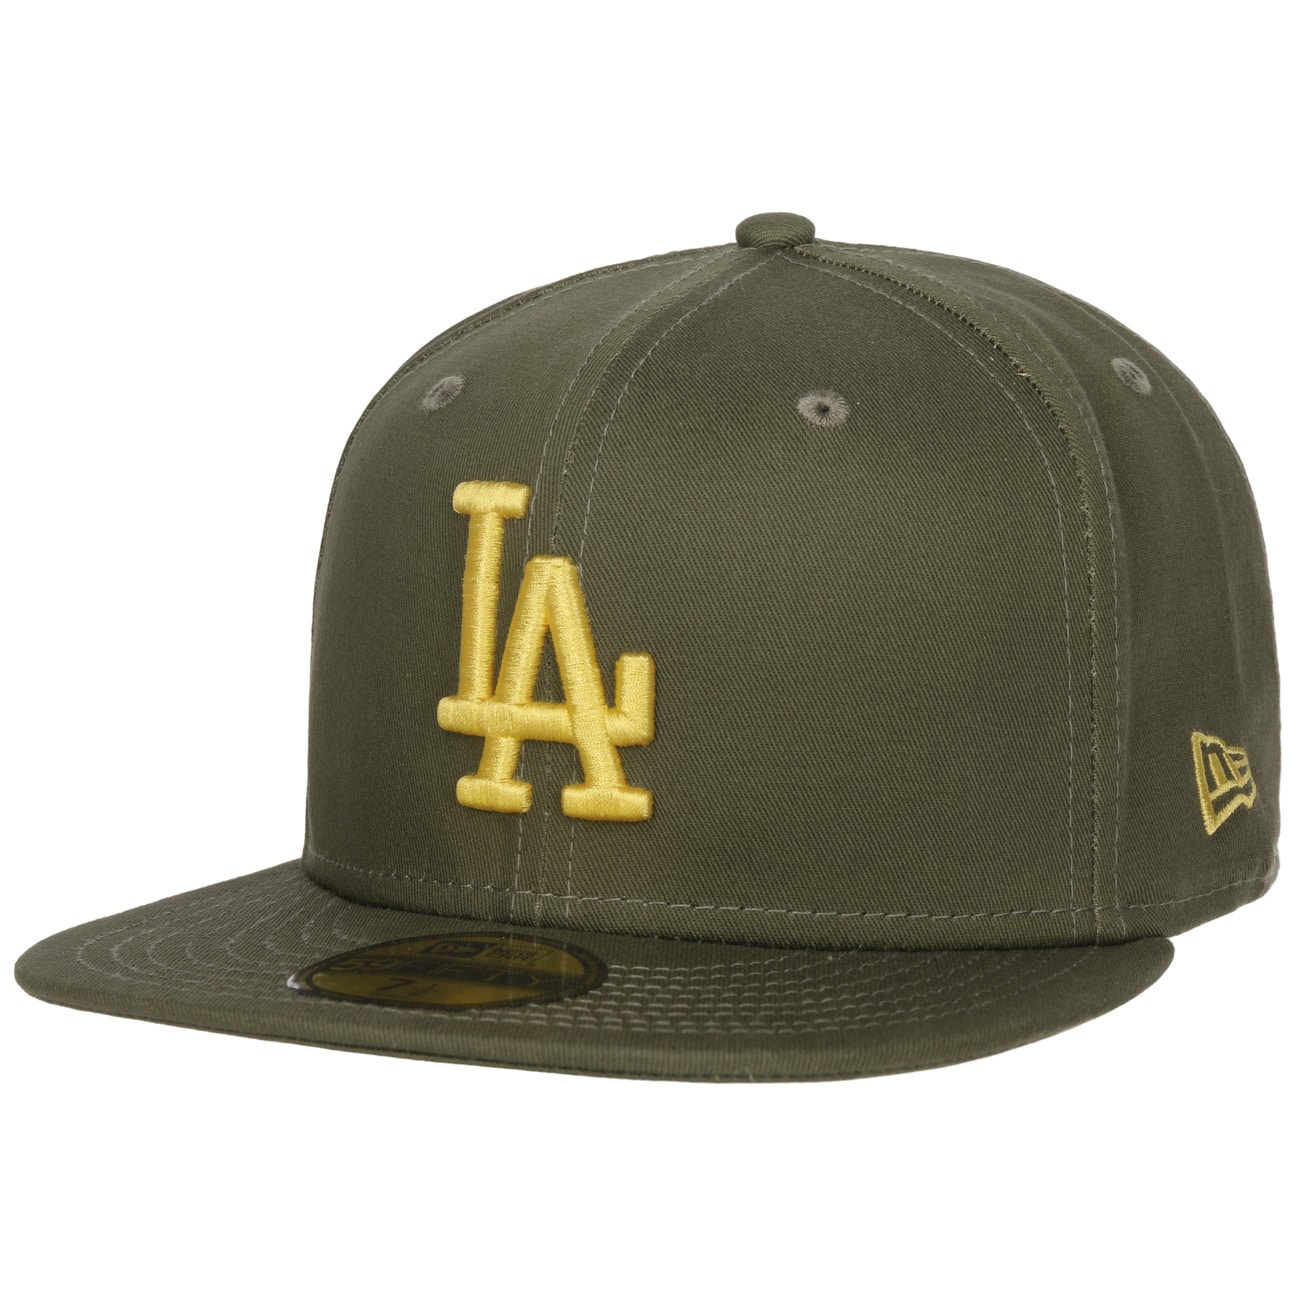 59Fifty LA Dodgers Twotone Cap by New Era von new era